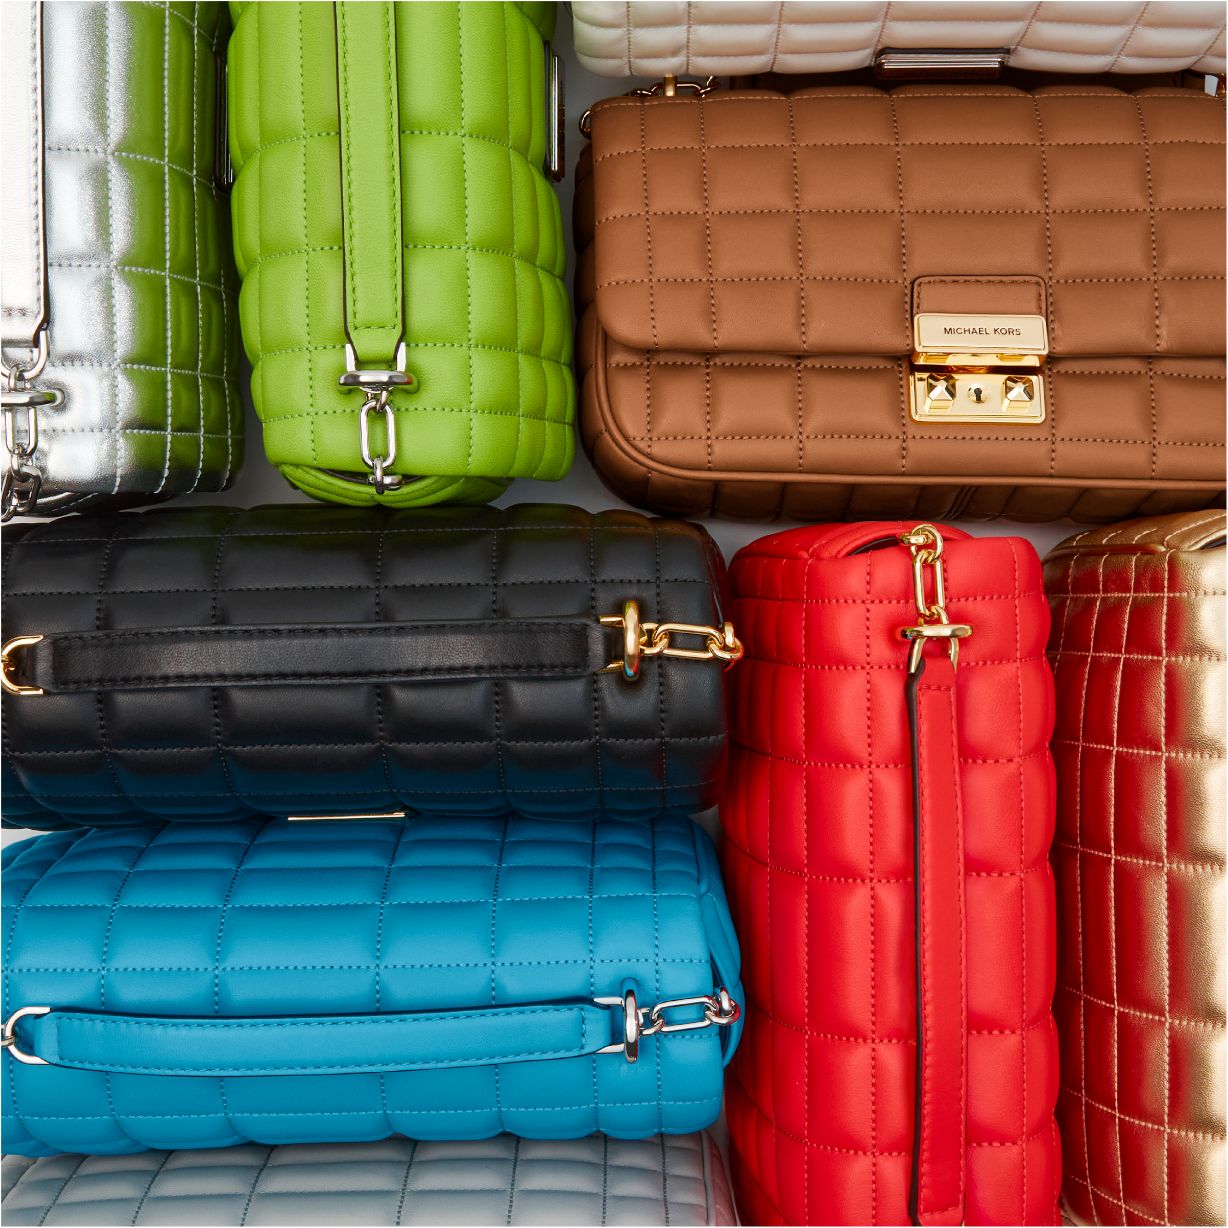 Image result for michael kors wallet ↬ ριnτεrεsτ : dεlιghτfυlglαcε ↫ | Micheal  kors handbag, Trendy purses, Purses michael kors